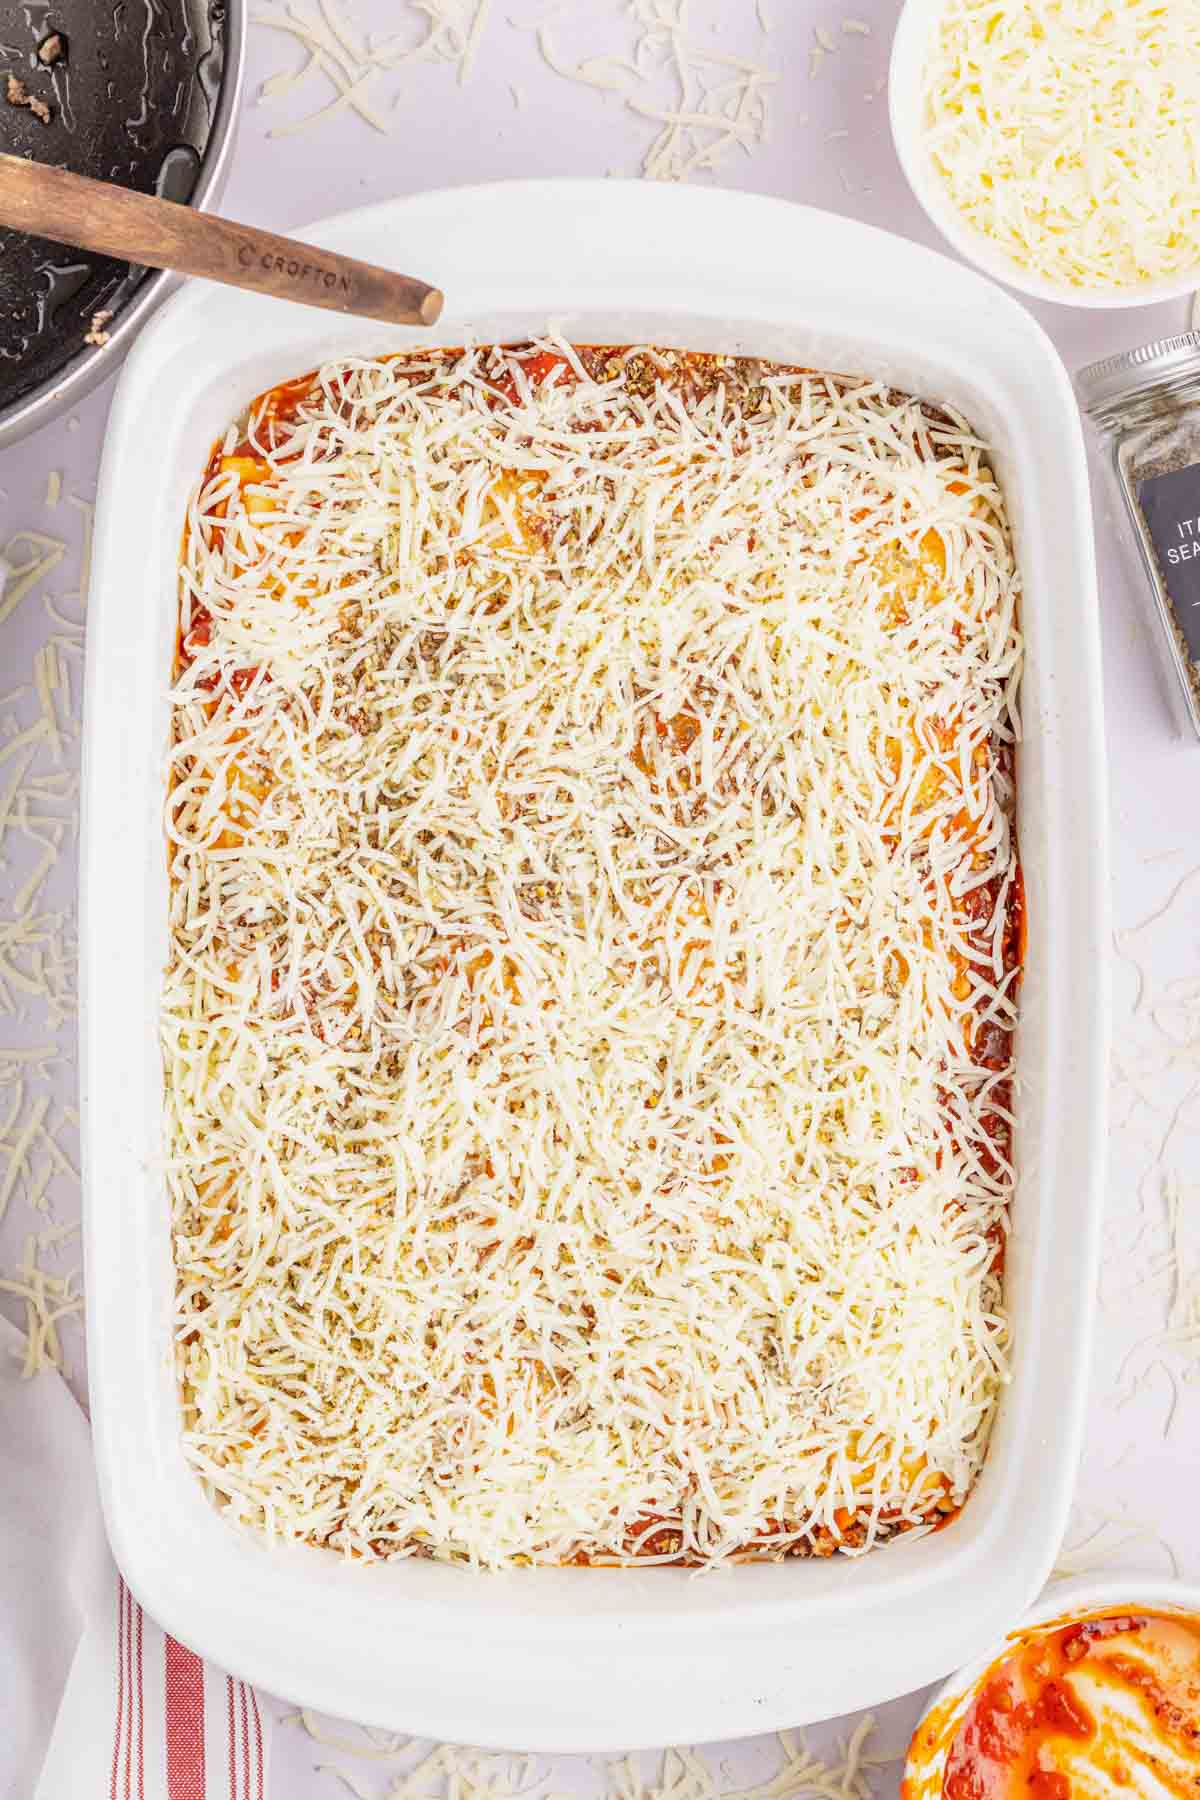 Italian seasoning and shredded mozzarella on top of ravioli casserole